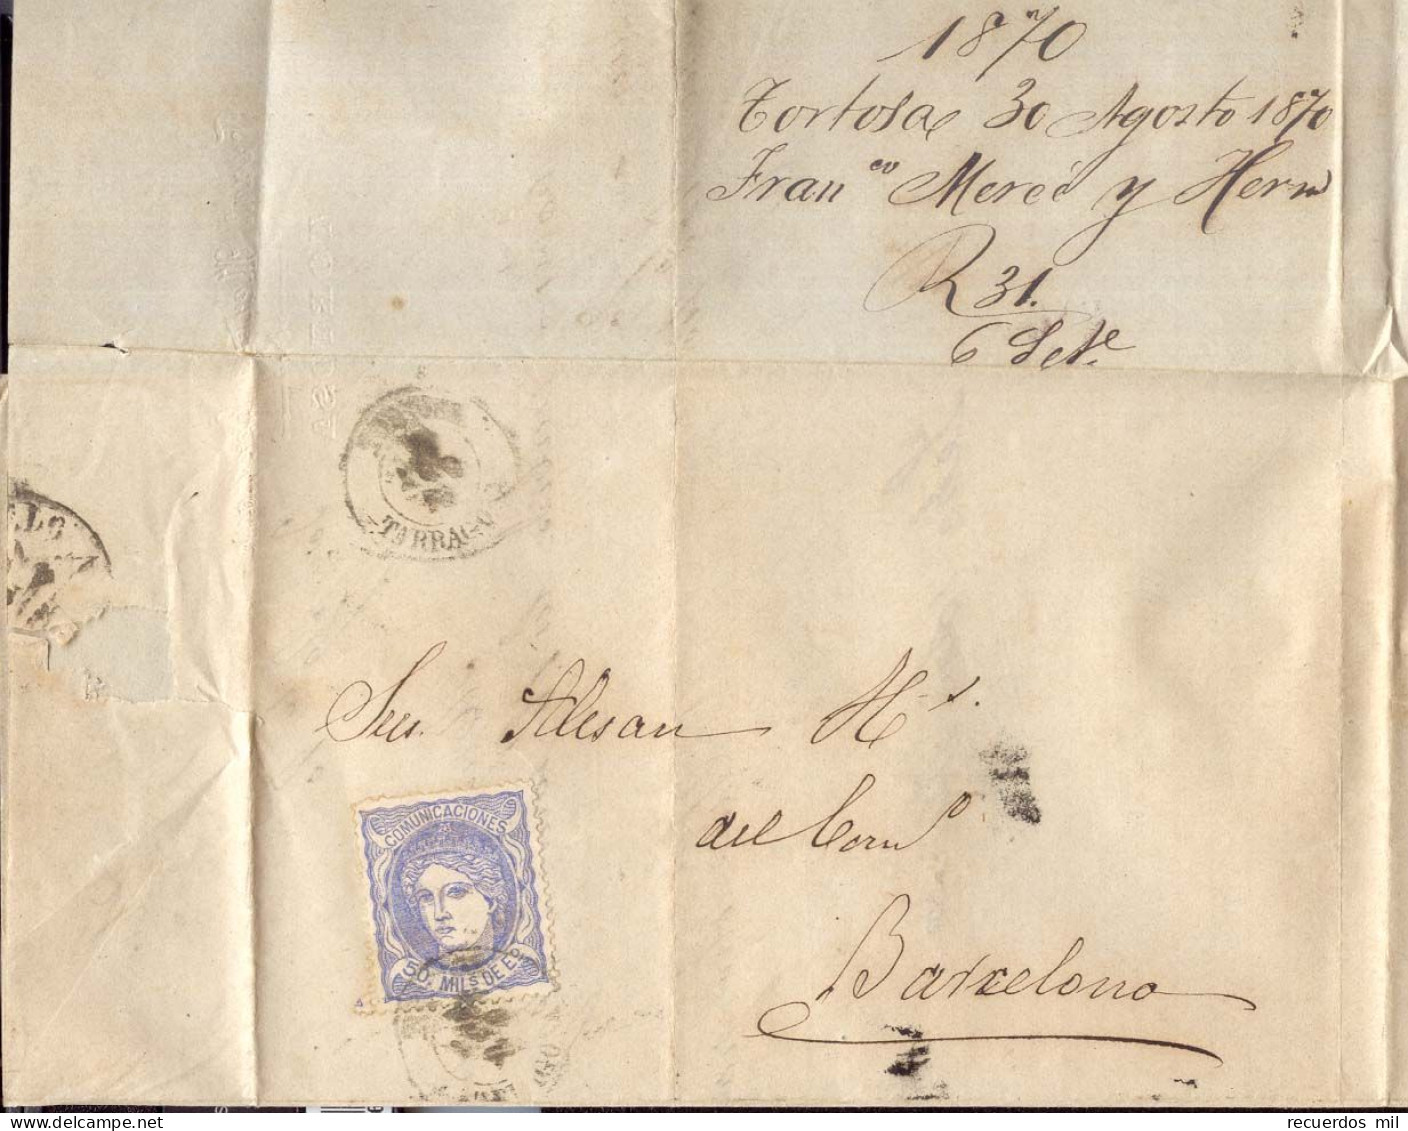 Año 1870 Edifil 107 Alegoria Carta  Matasellos Tortosa Tarragona Membrete Francisco Merce Y Hermano - Lettres & Documents